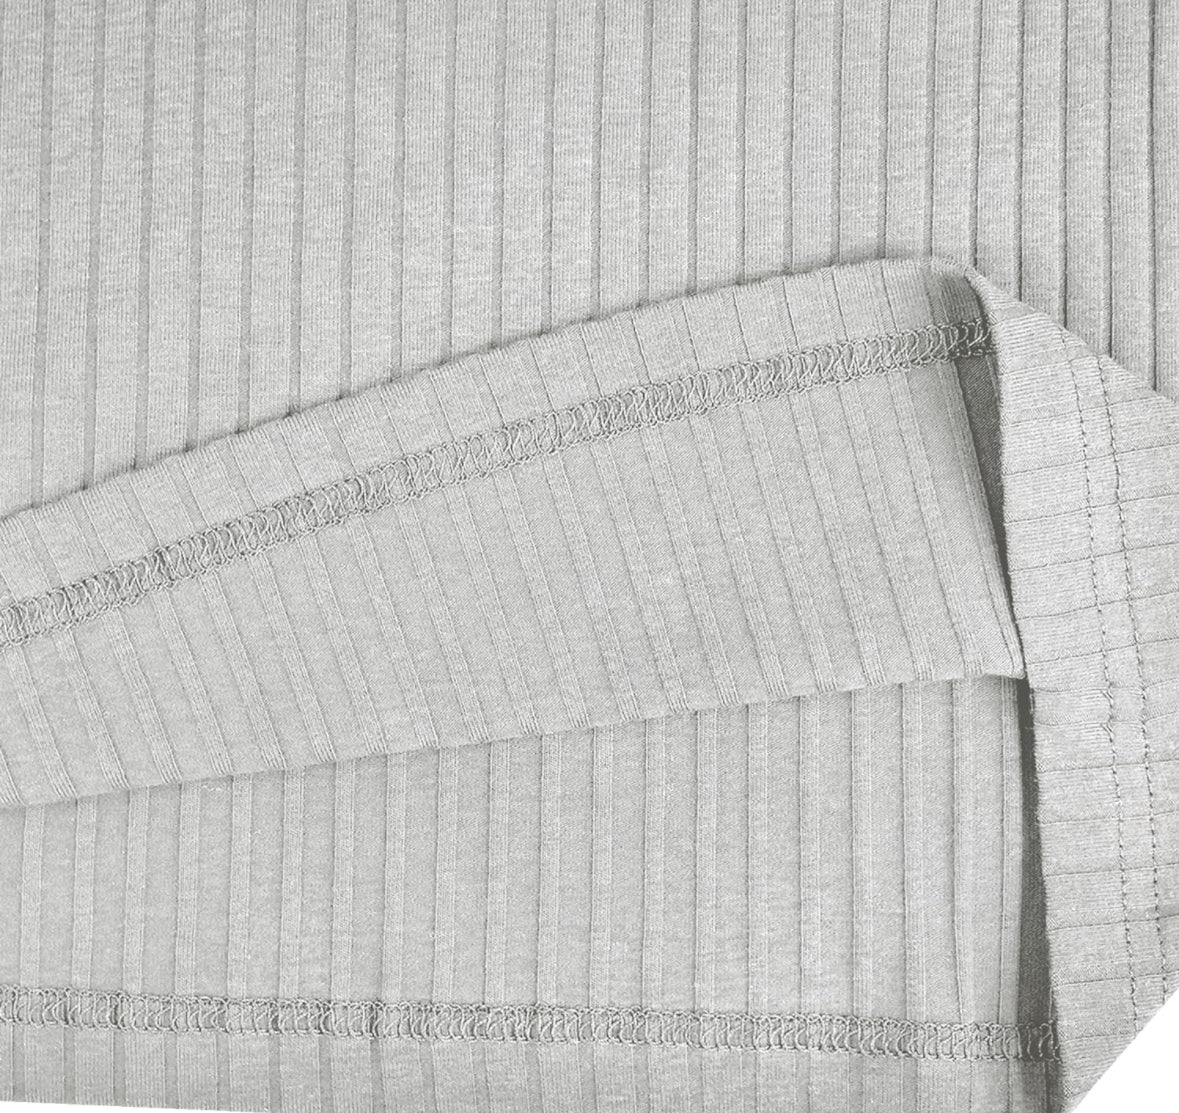 Ribbed Knit Textured Polo “Gray"